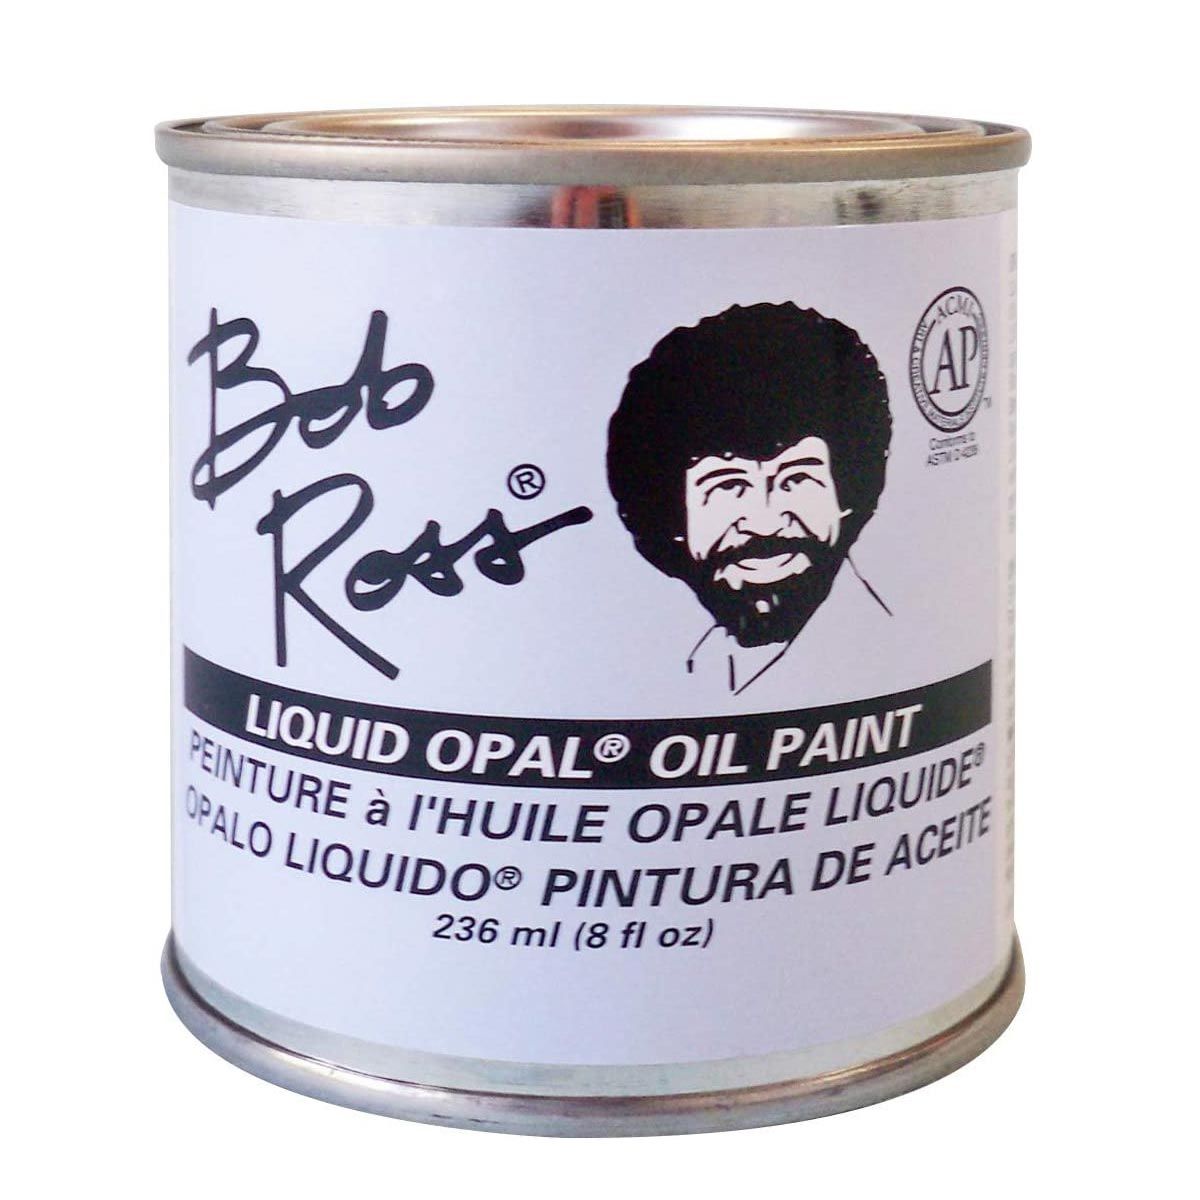 Bob Ross Liquid Opal Oil Paint 8 oz